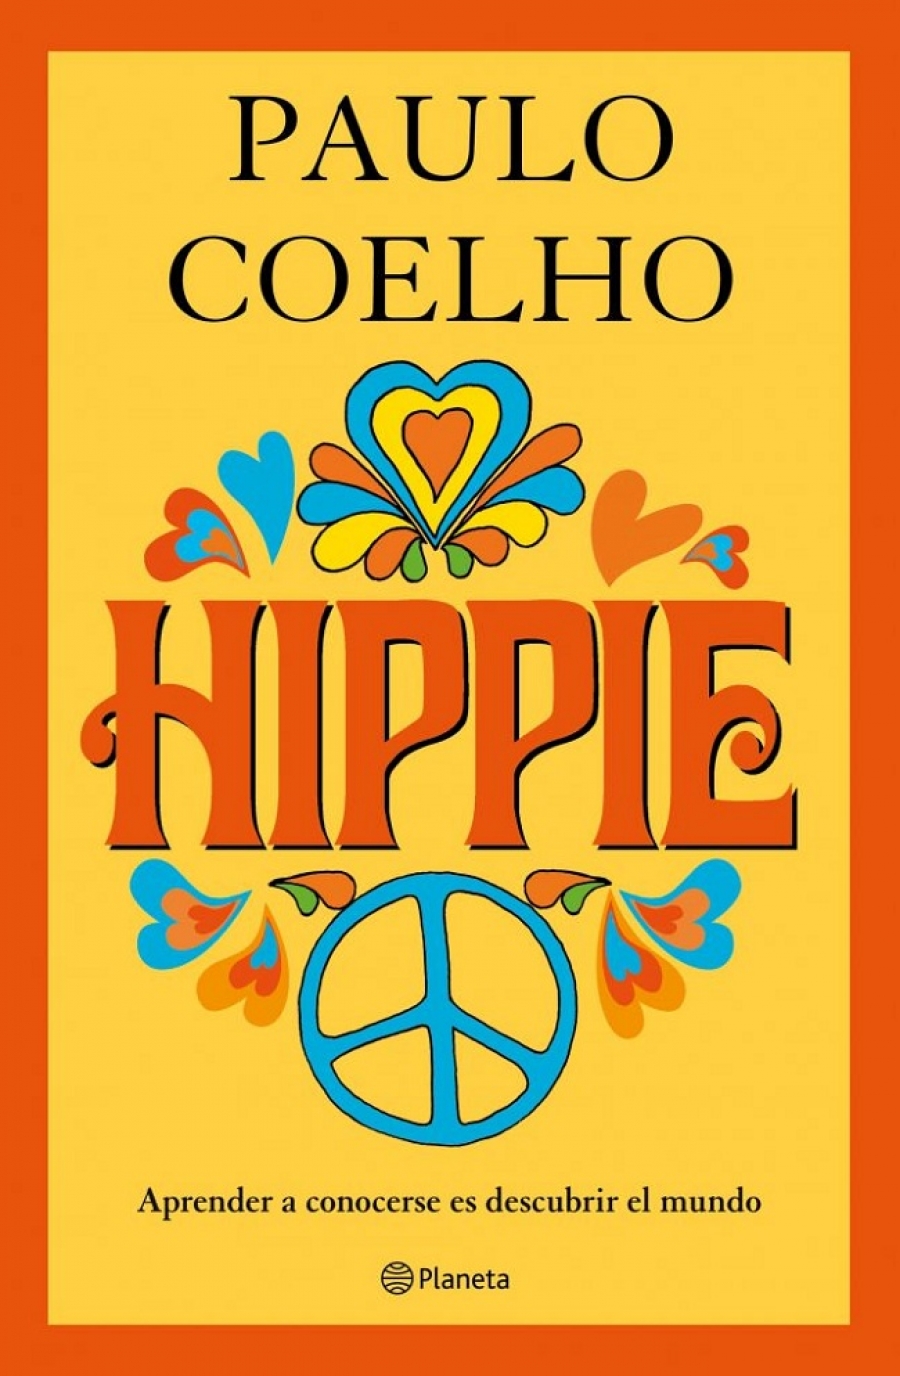 paulo hippie